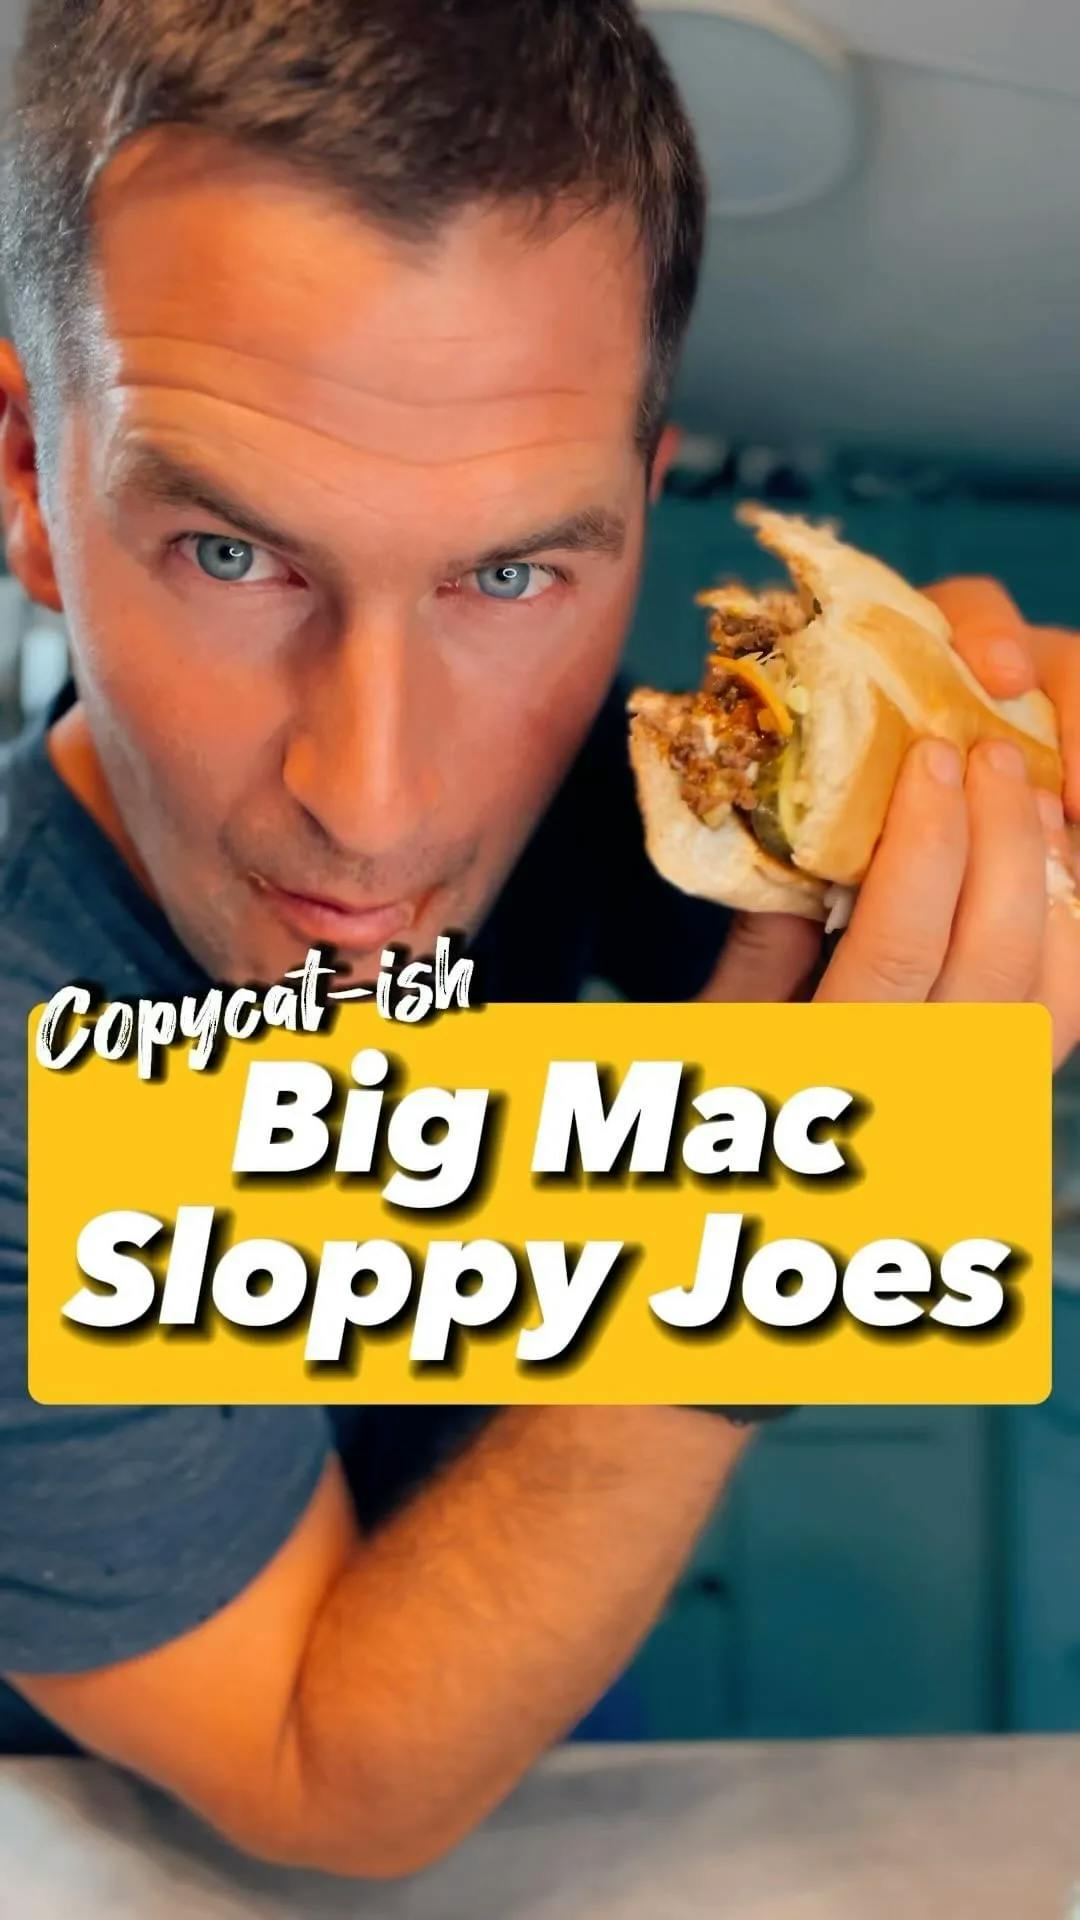 Picture for Copycat-ish Big Mac Sloppy Joes